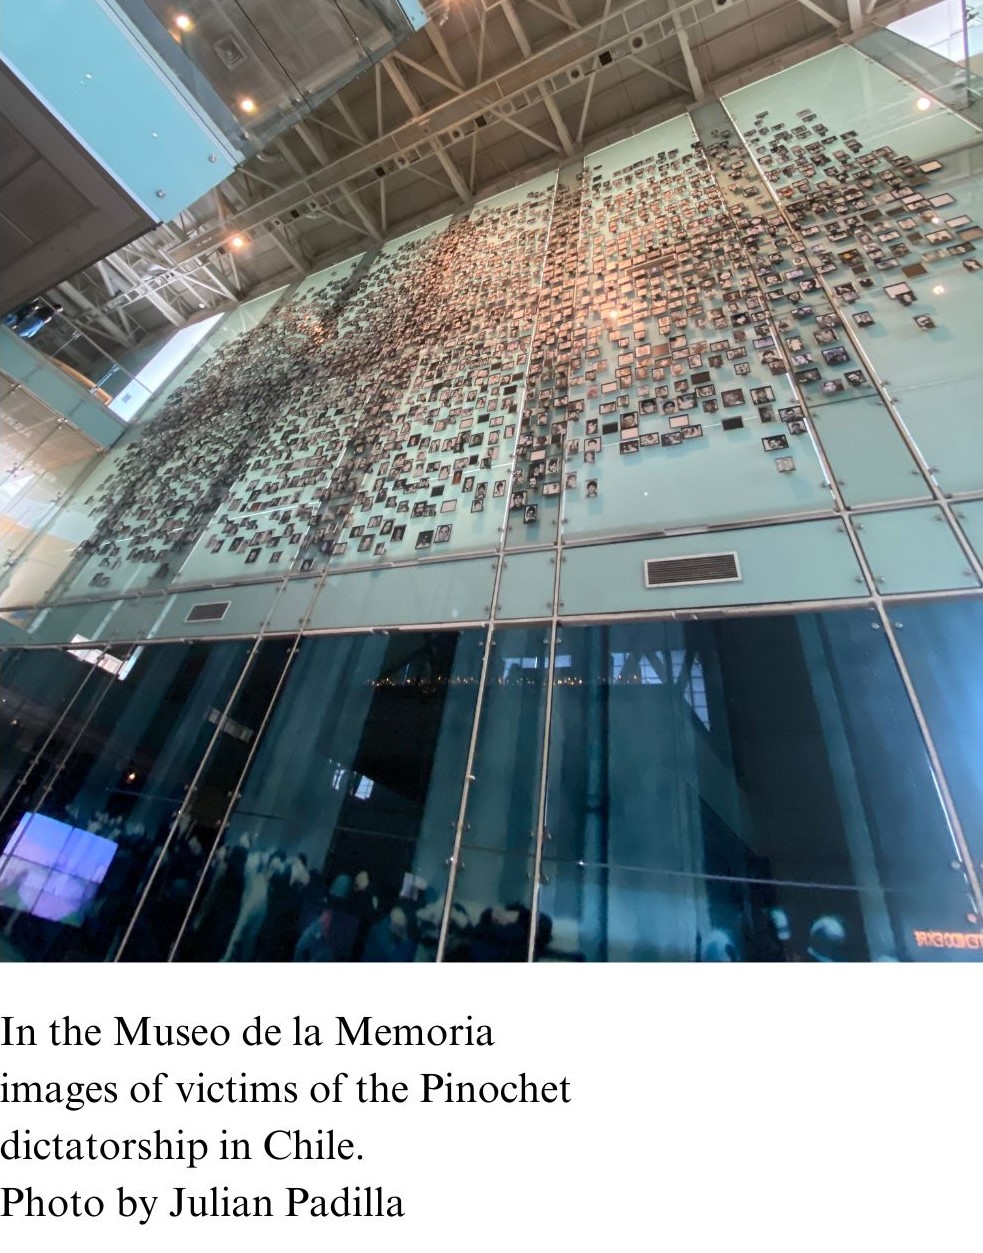 n-the-Museo-de-la-Memoria,-images-of-victims-of-the-Pinochet-dictatorship-in-Chile.-Photo-by-Julian-Padilla-1.jpg